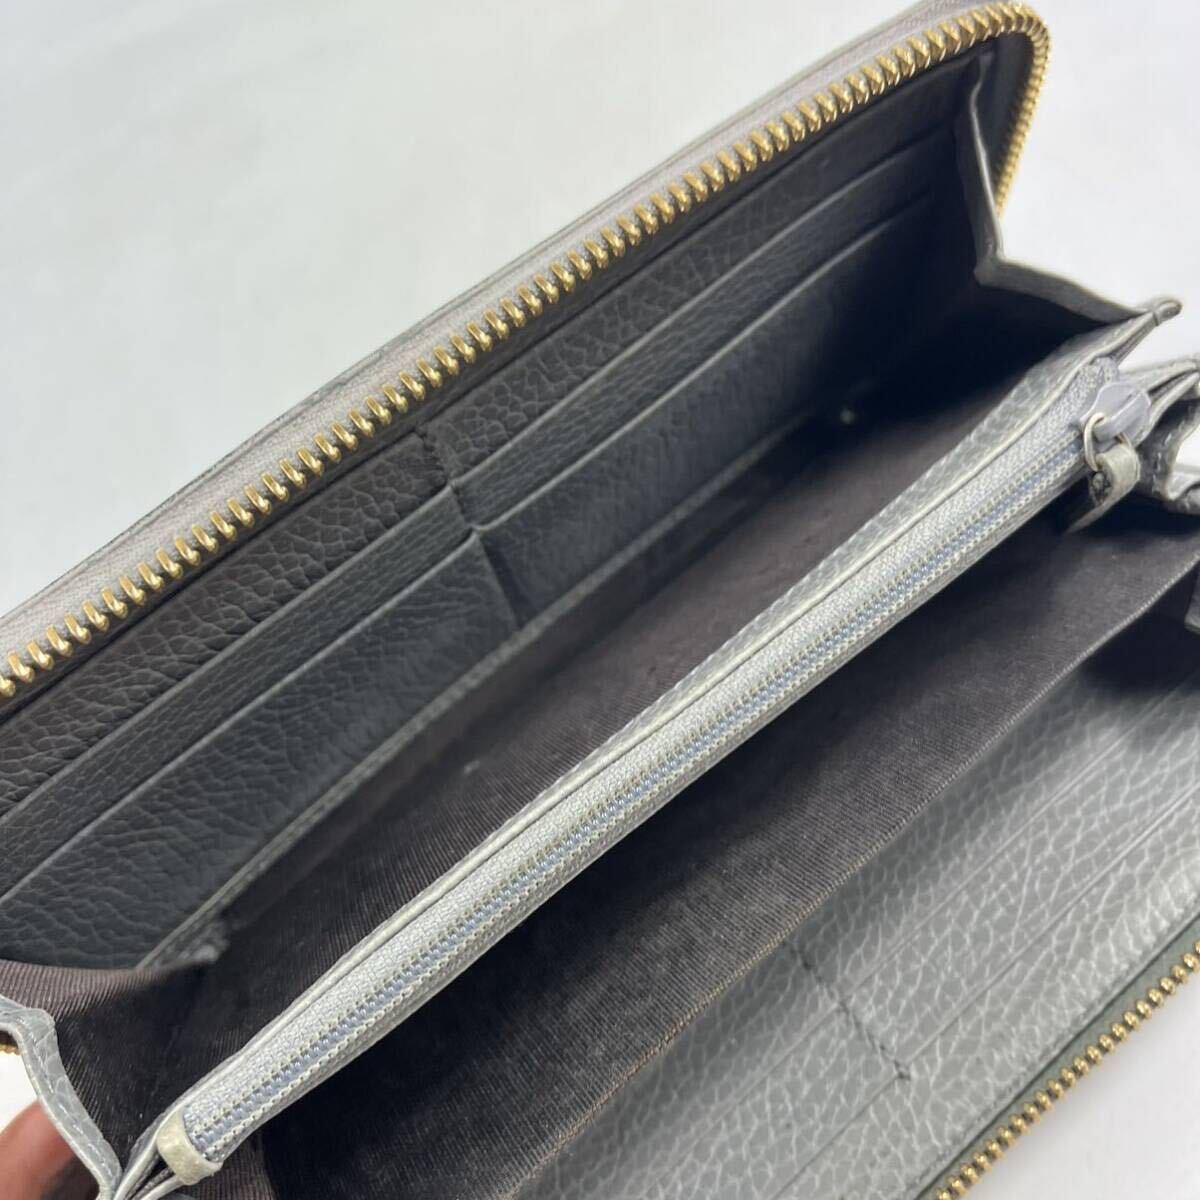 1 иен ~[ трудно найти товар ] GUCCI Gucci раунд застежка-молния длинный кошелек ma-montoGG металлические принадлежности Gold мужской женский бумажник 